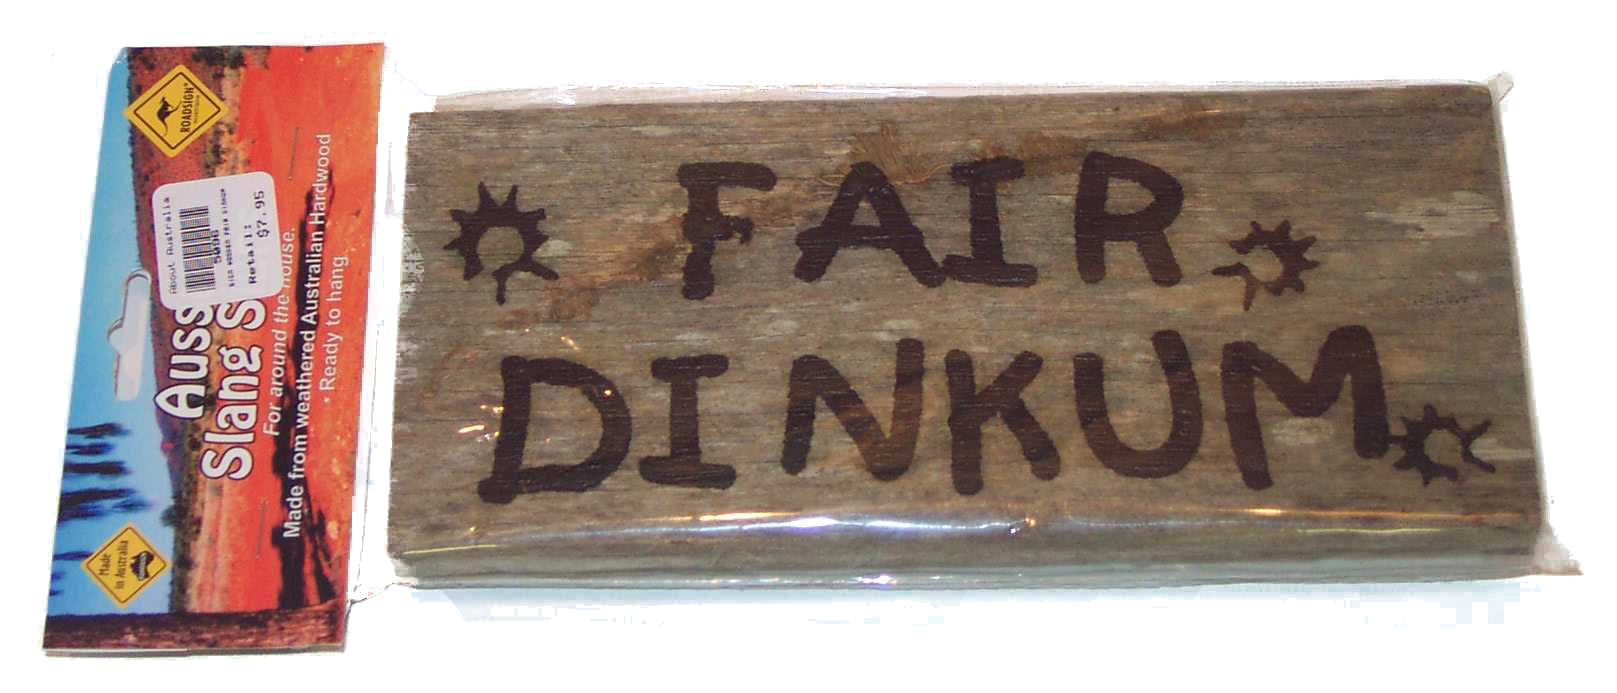 Wooden Road Sign - Fair Dinkum